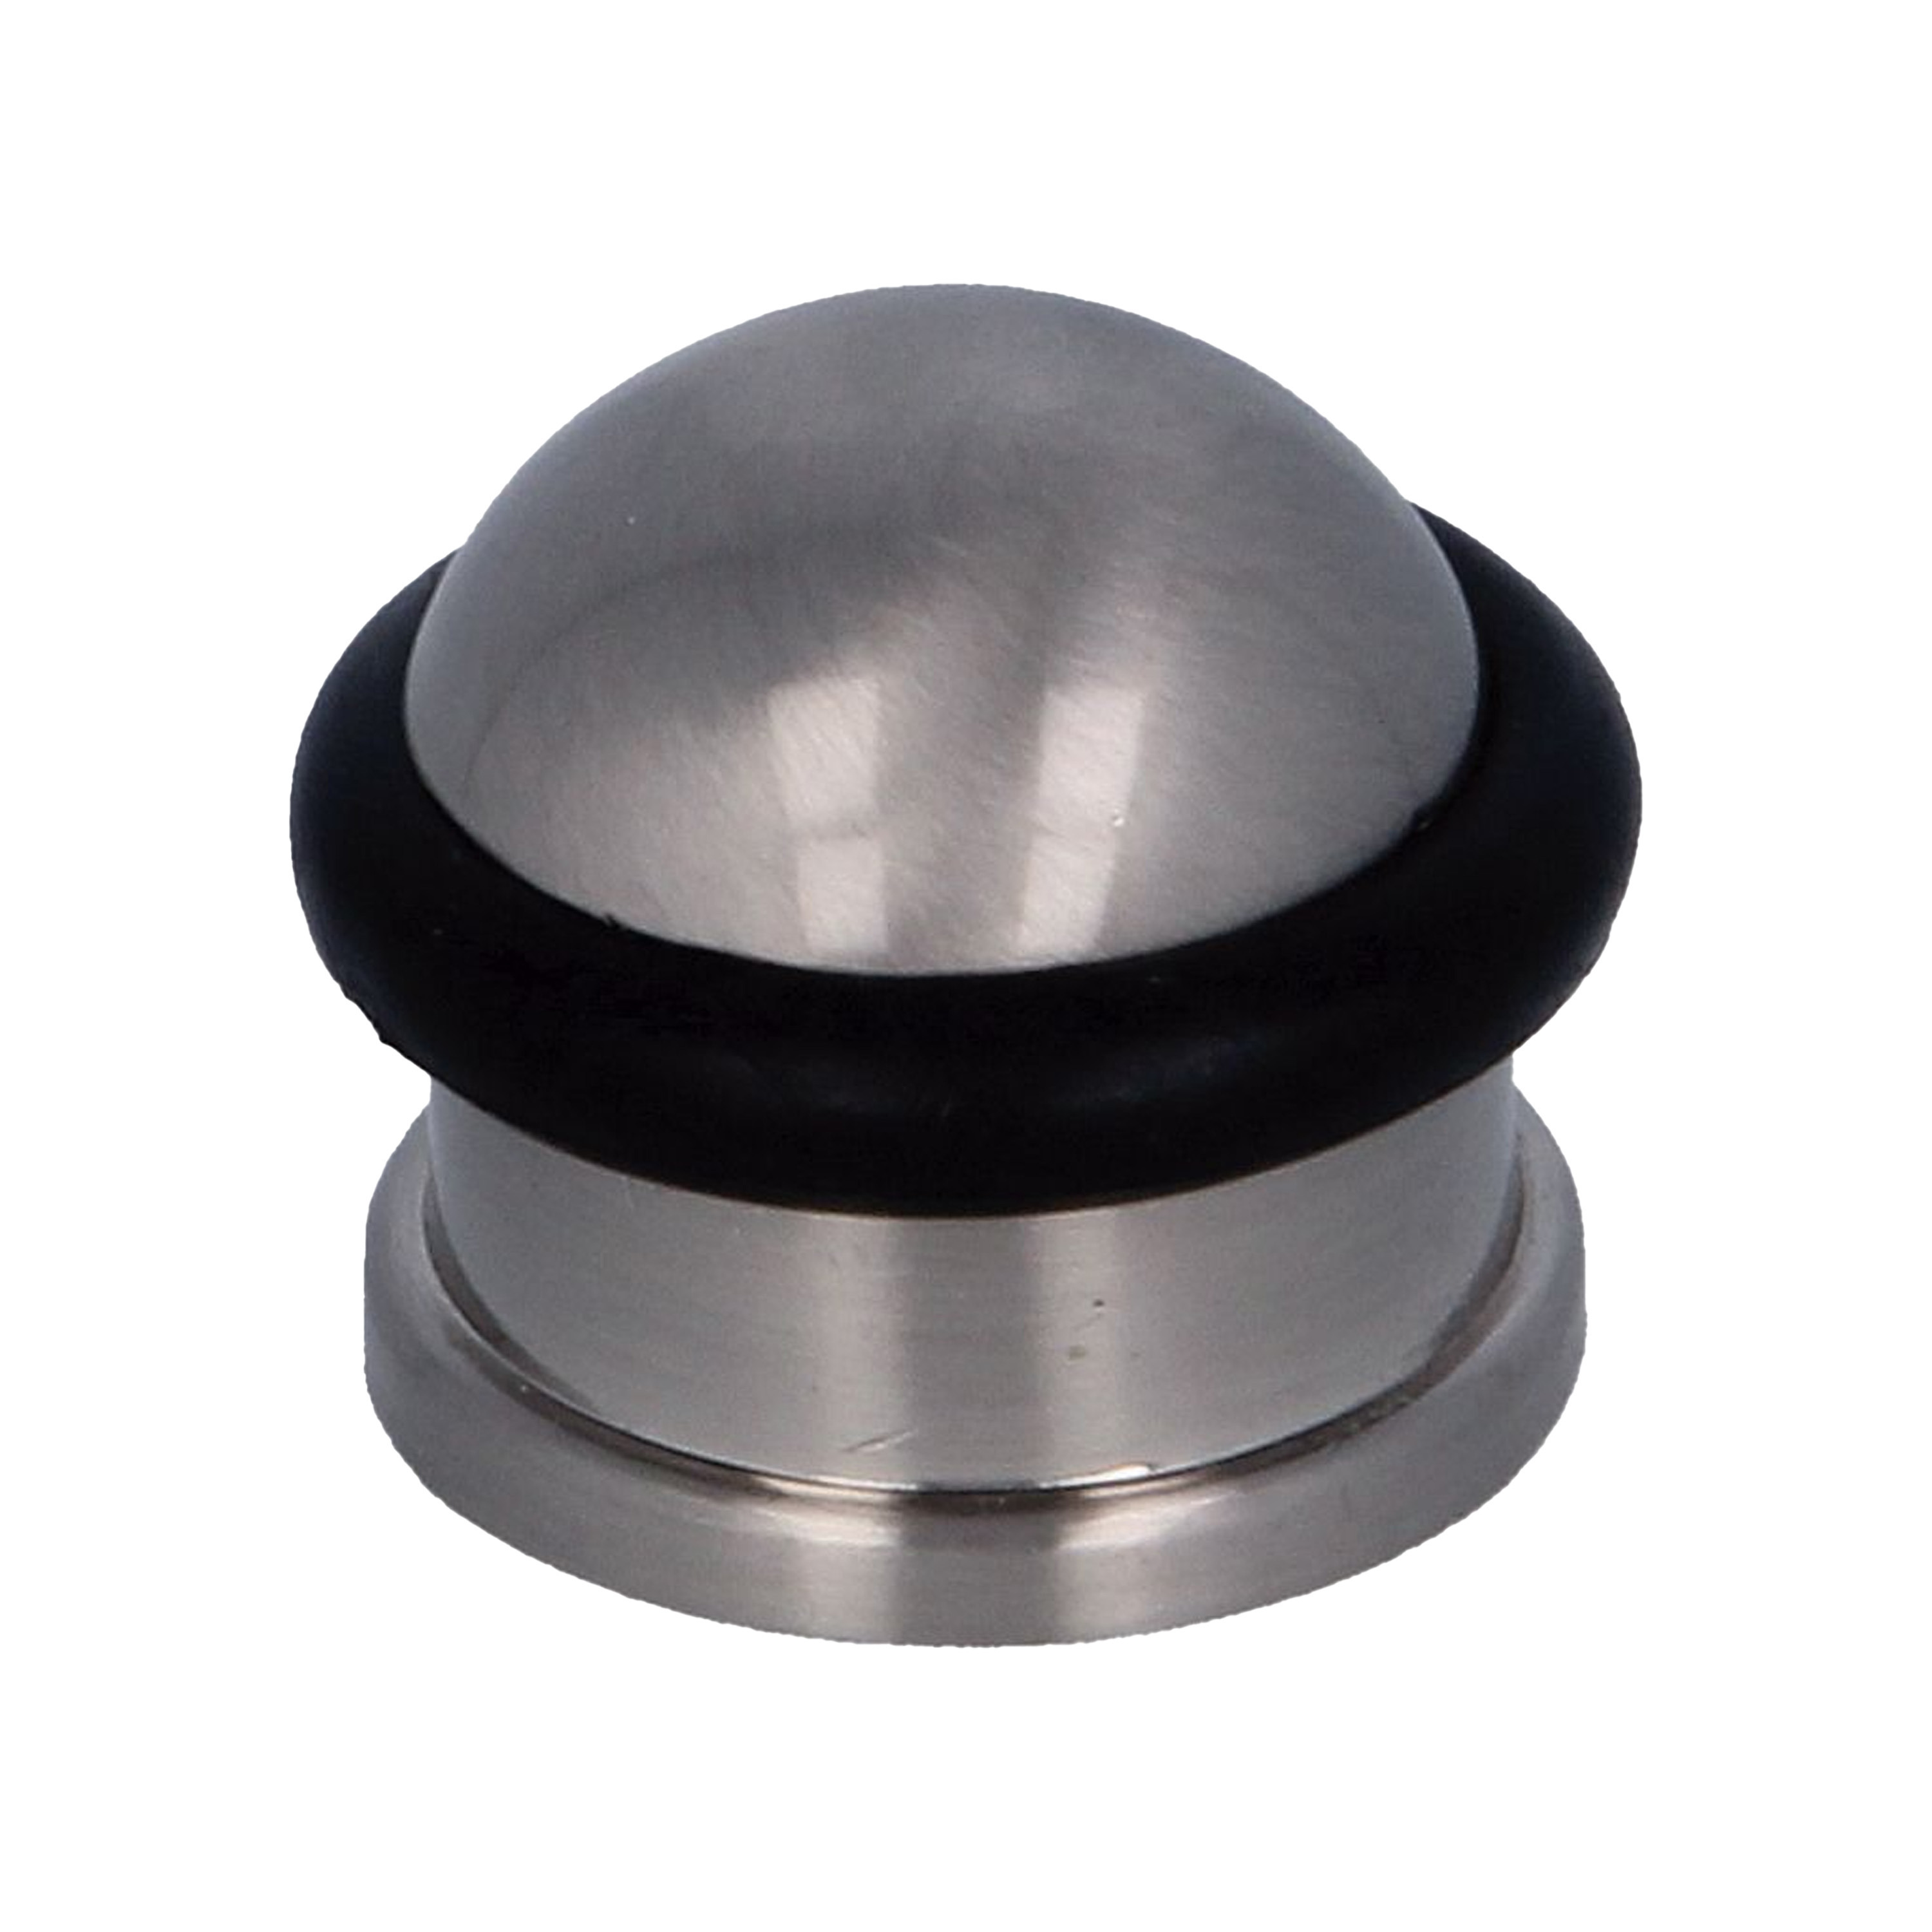 AMIG Deurstopper/deurbuffer - 1x - D30mm - inclusief schroeven - mat zilver  -